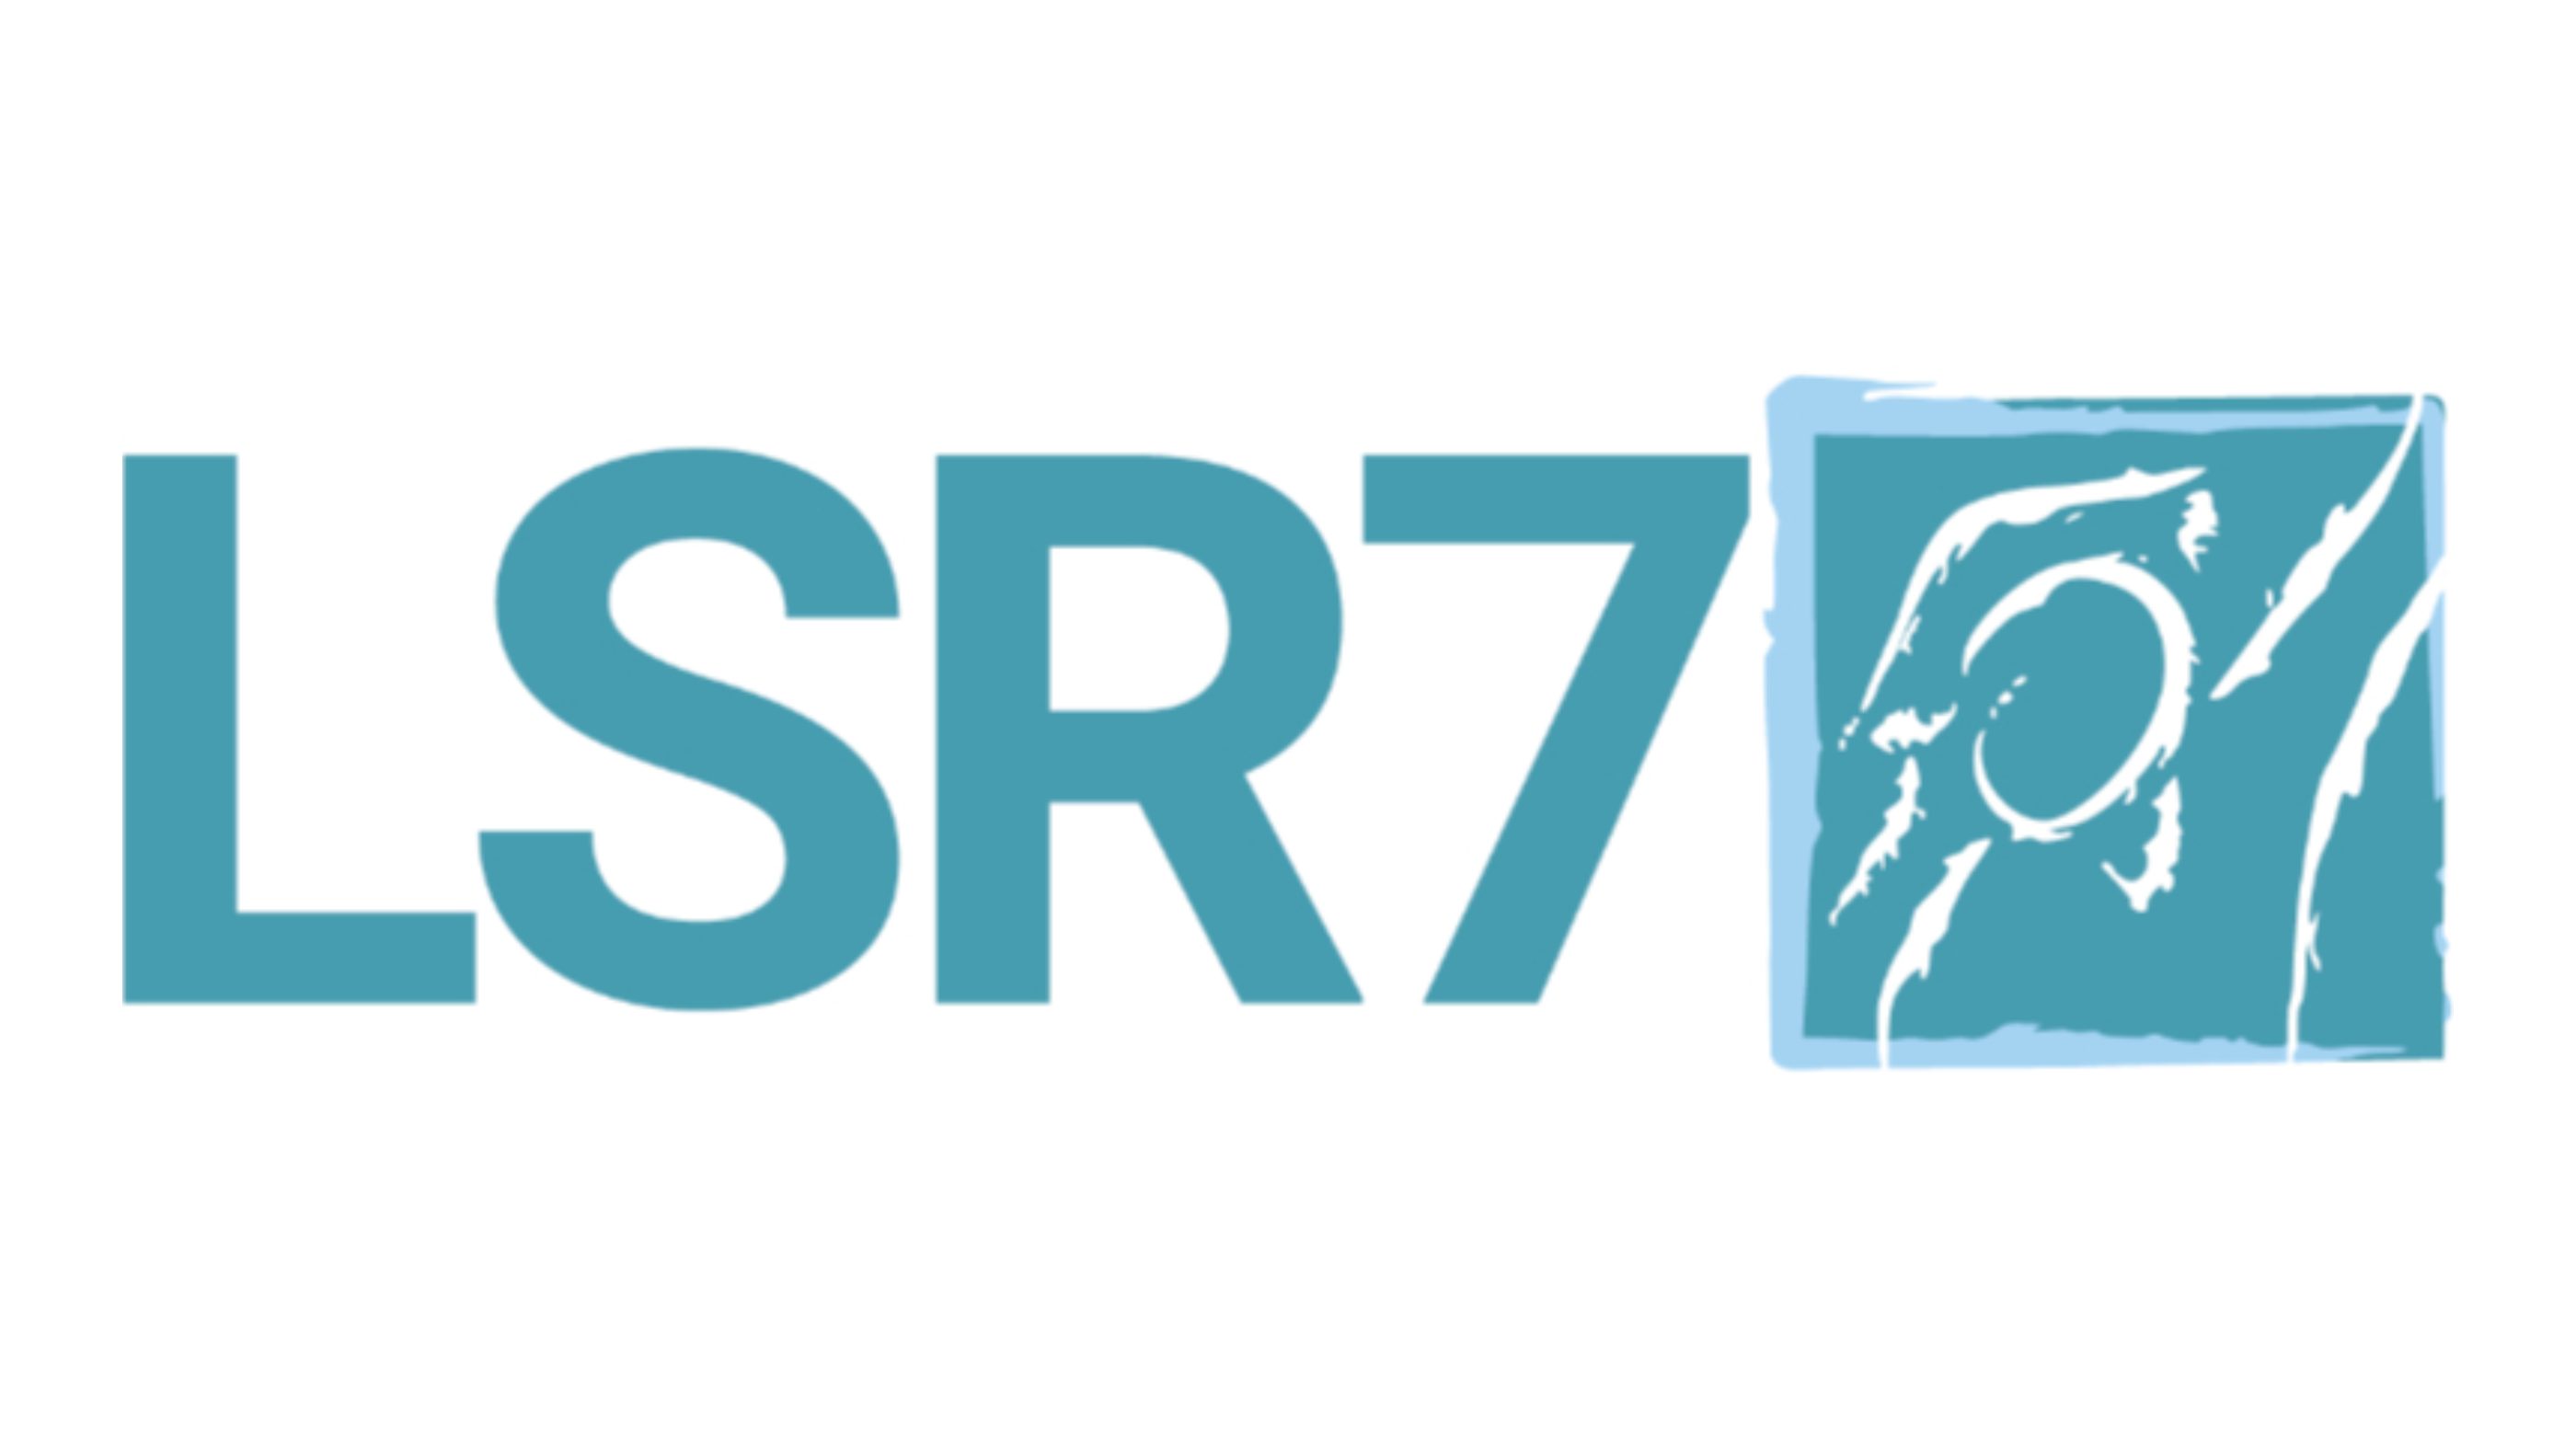 LSR7 Social Preview